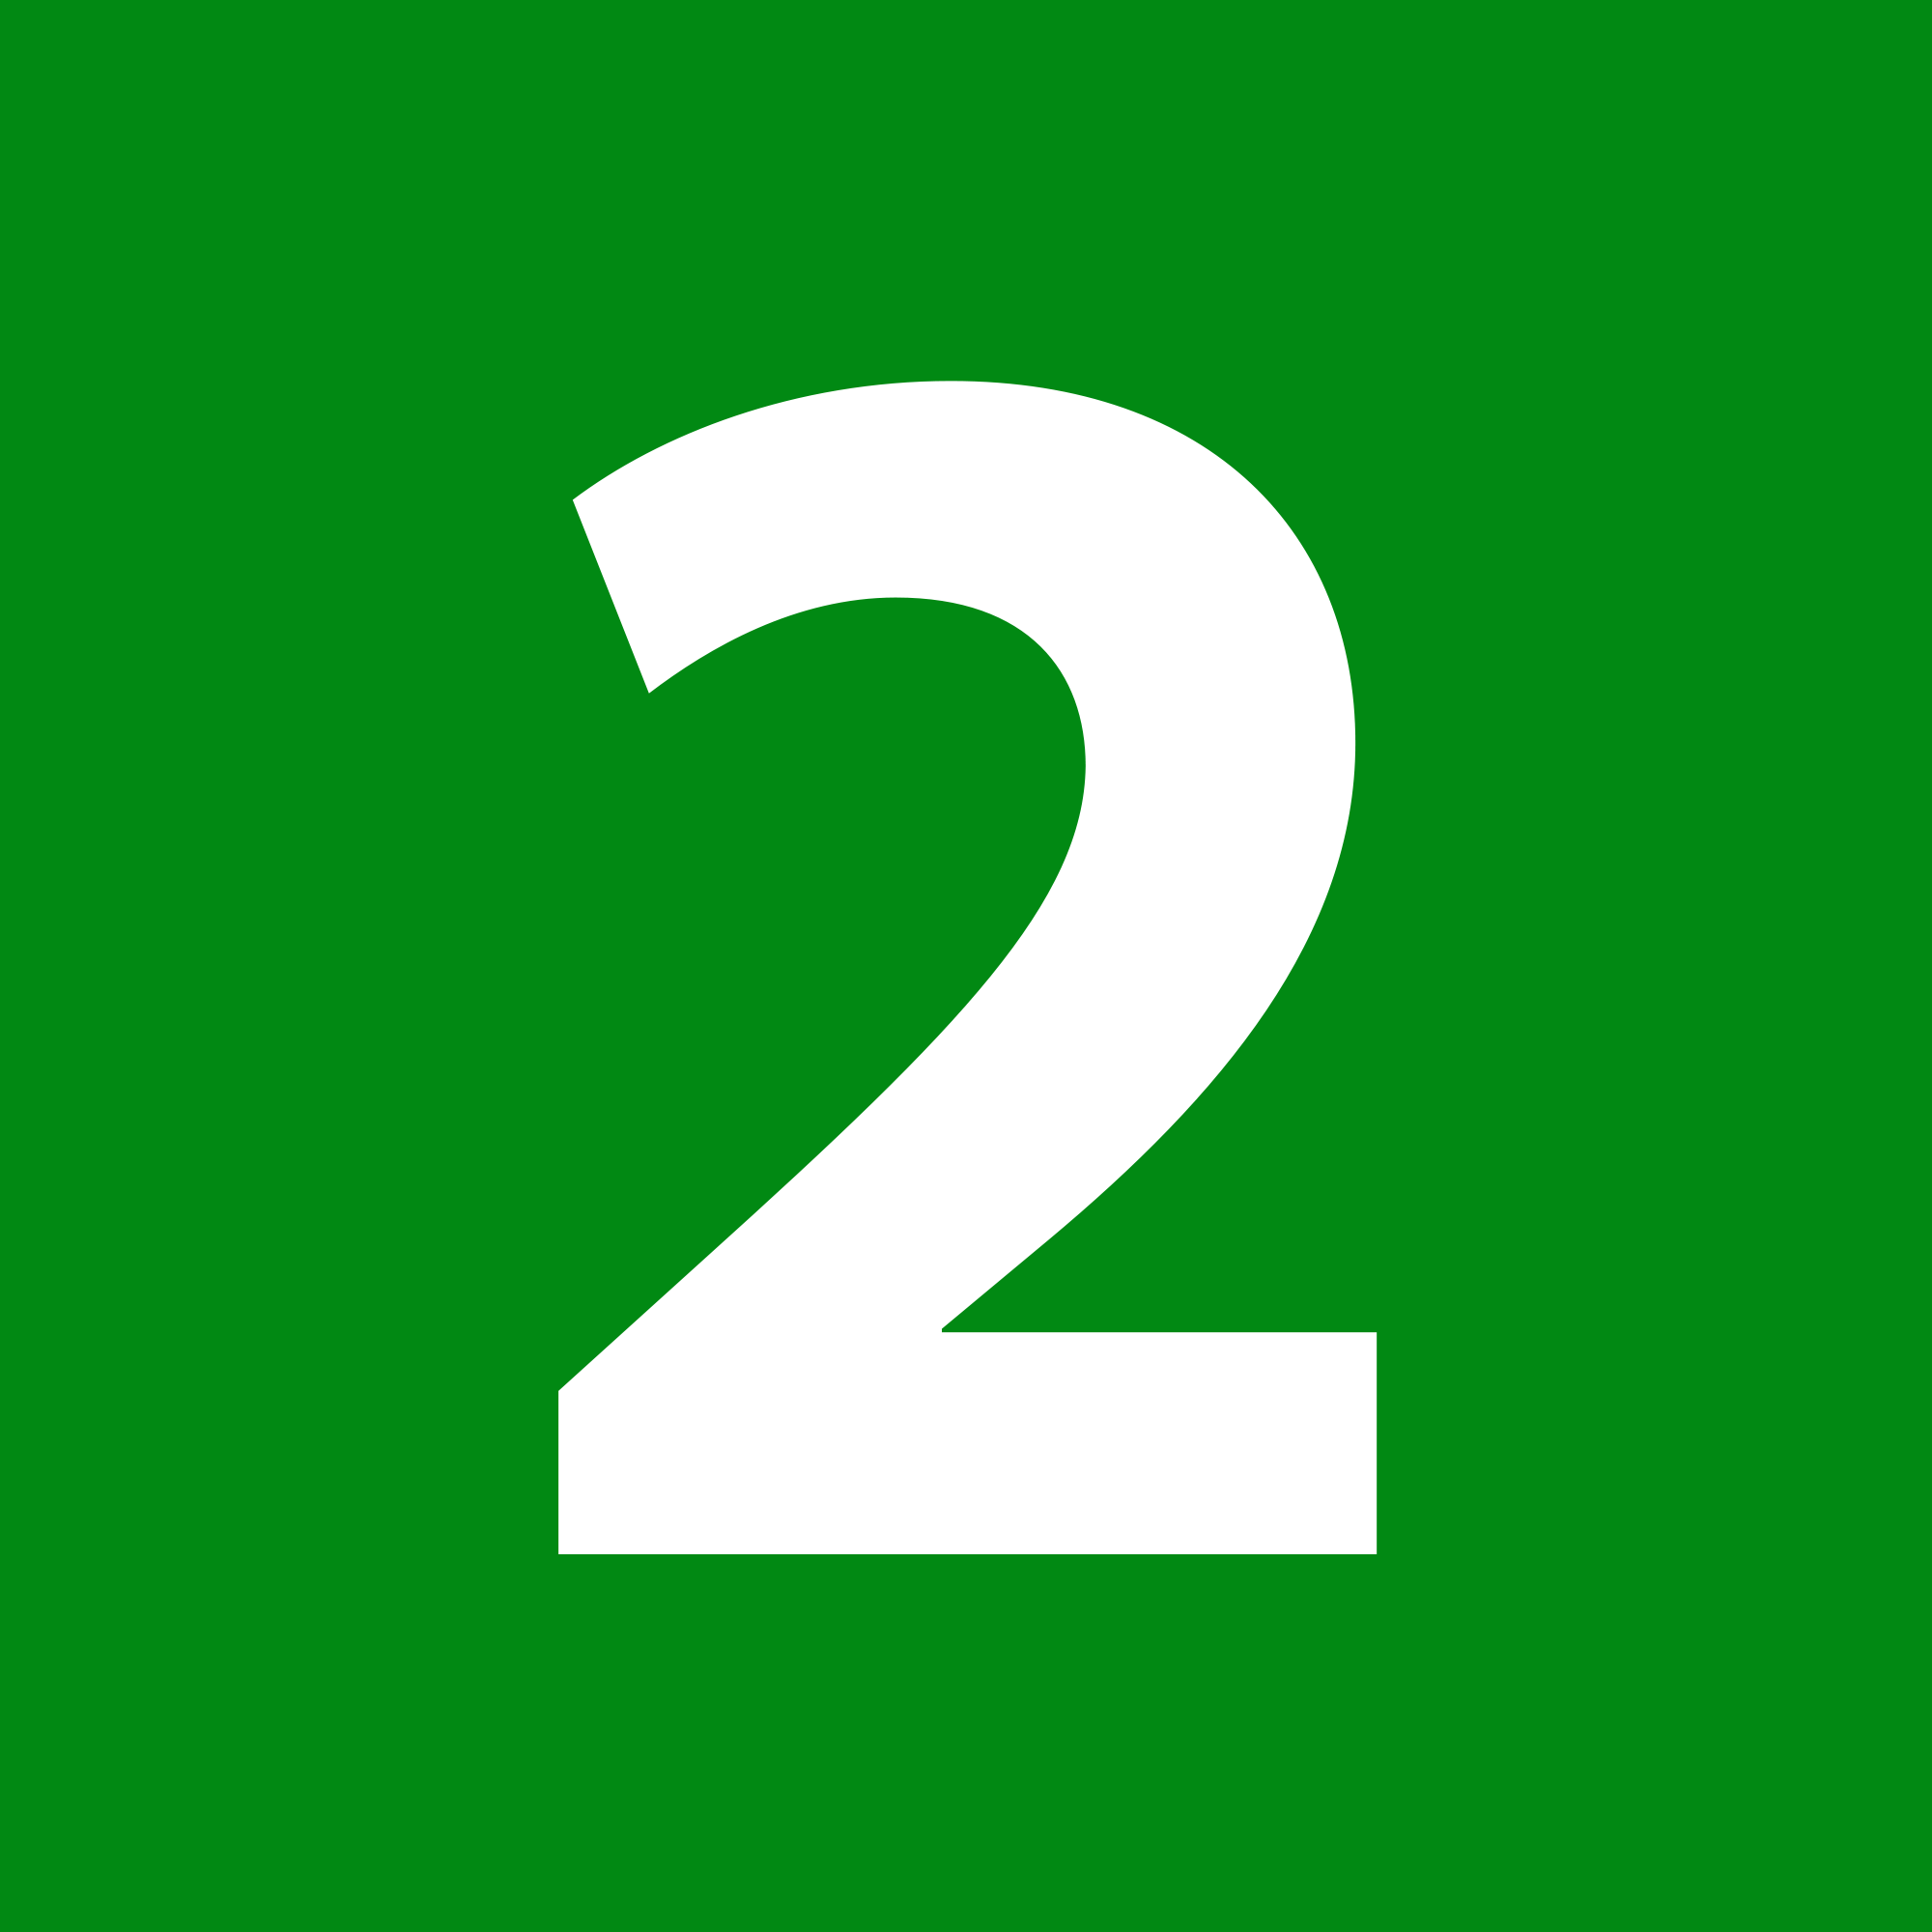 Metro 2 logo